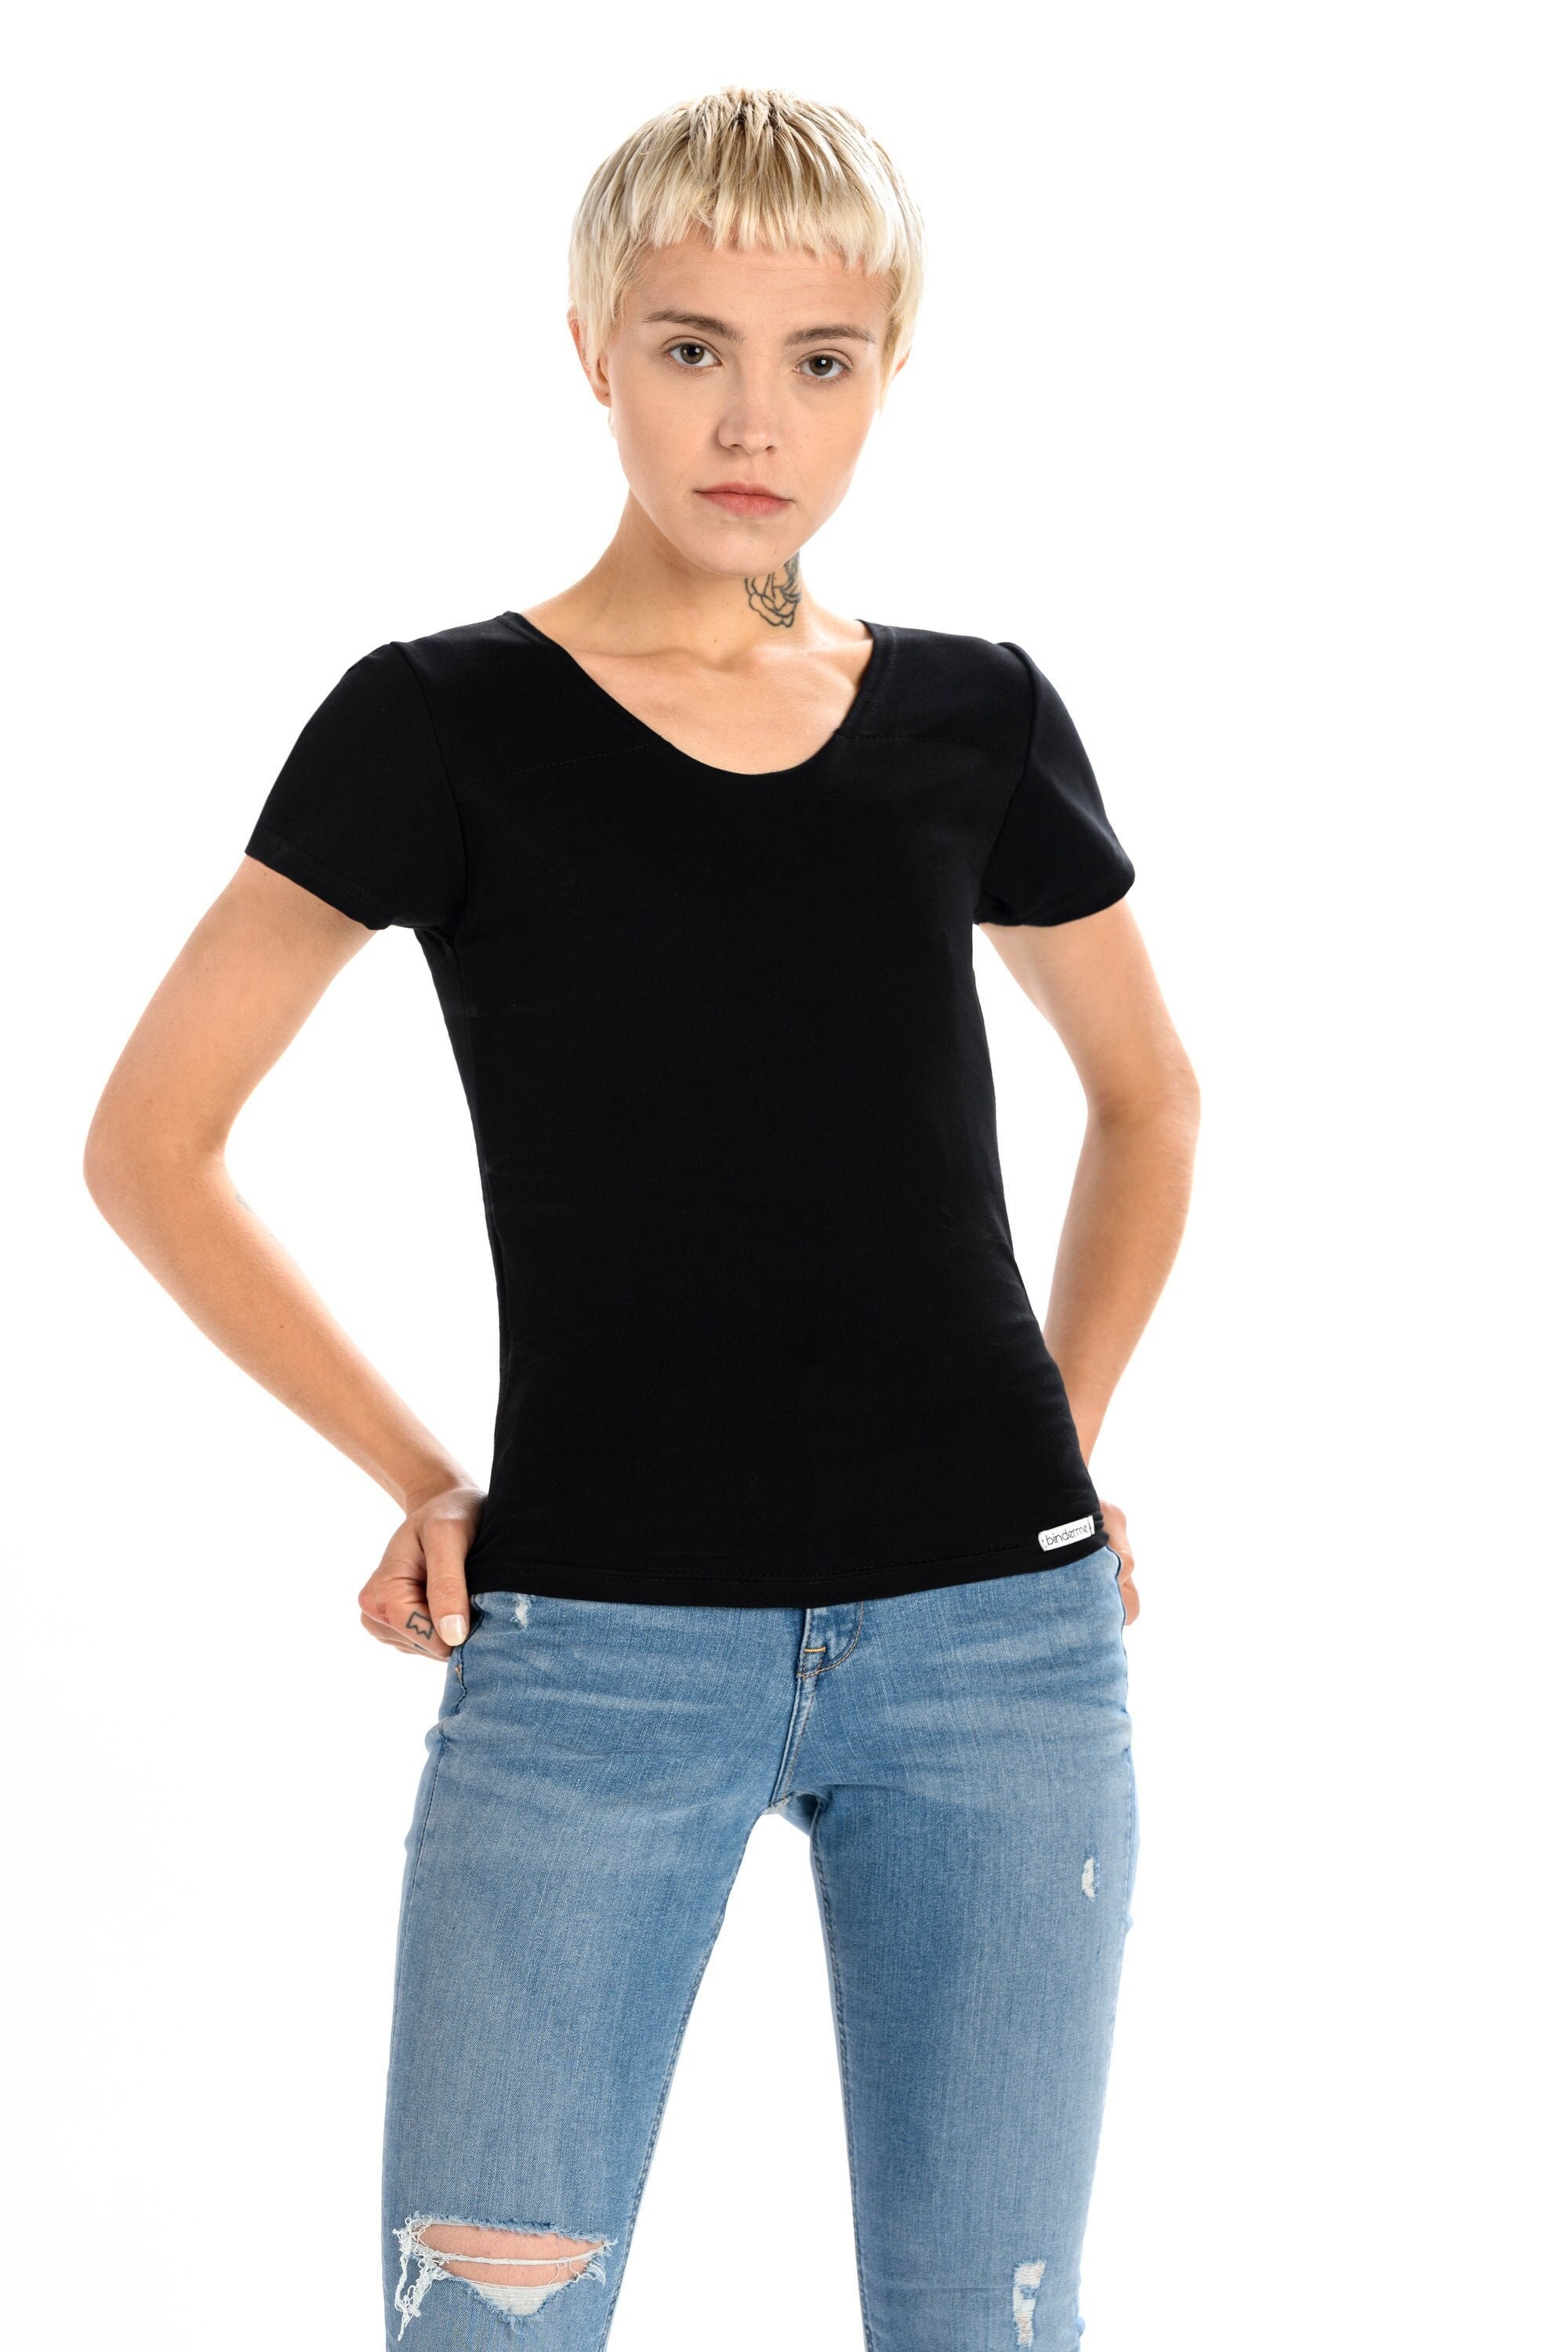 V Neck Shirts Built-in Bra - Short Sleeve Workout Tees for Women